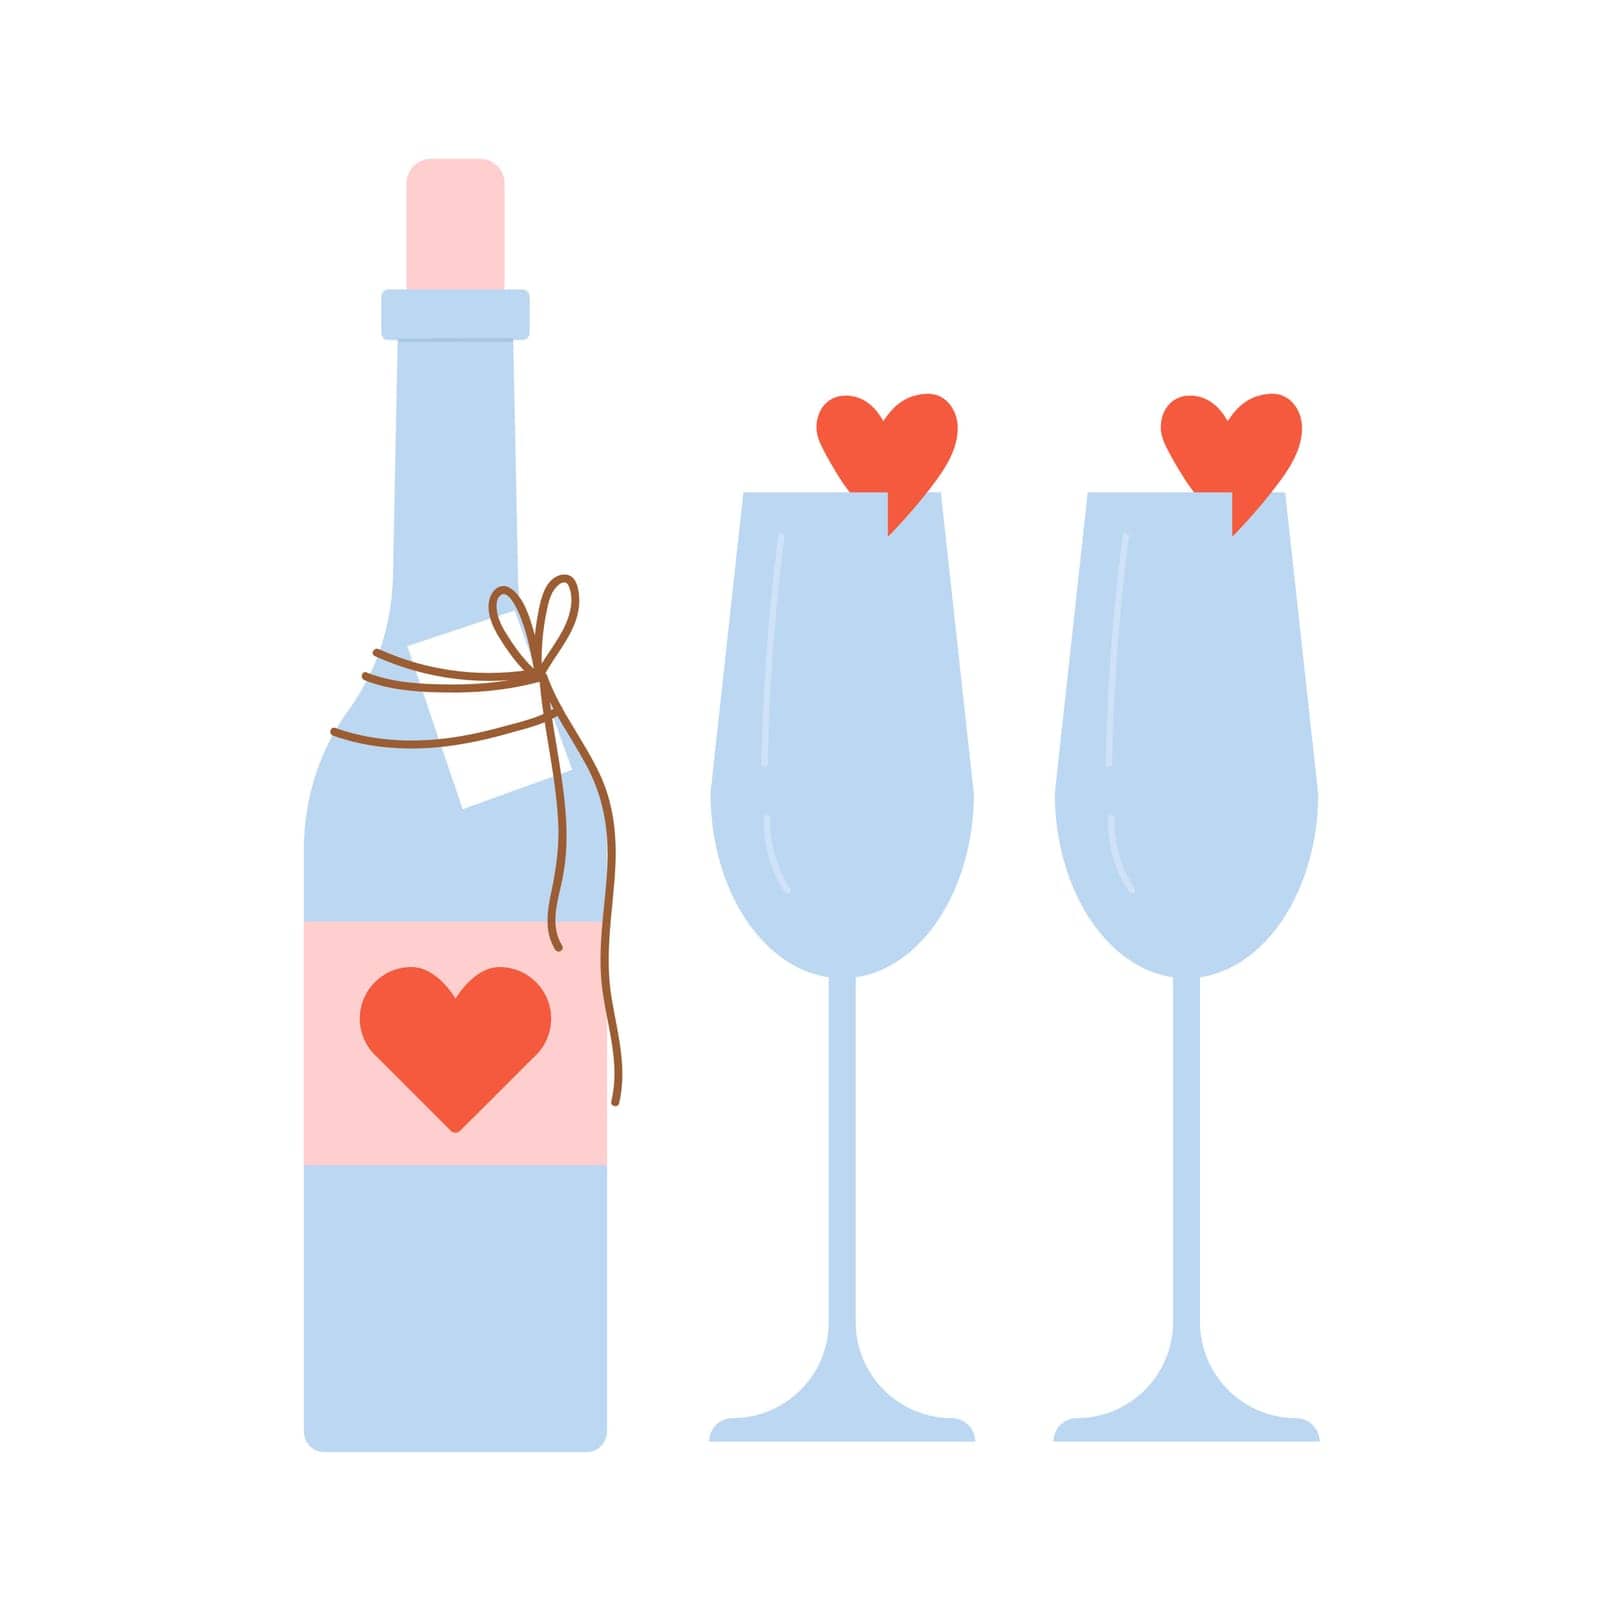 Celebrating love with champagne by Popov